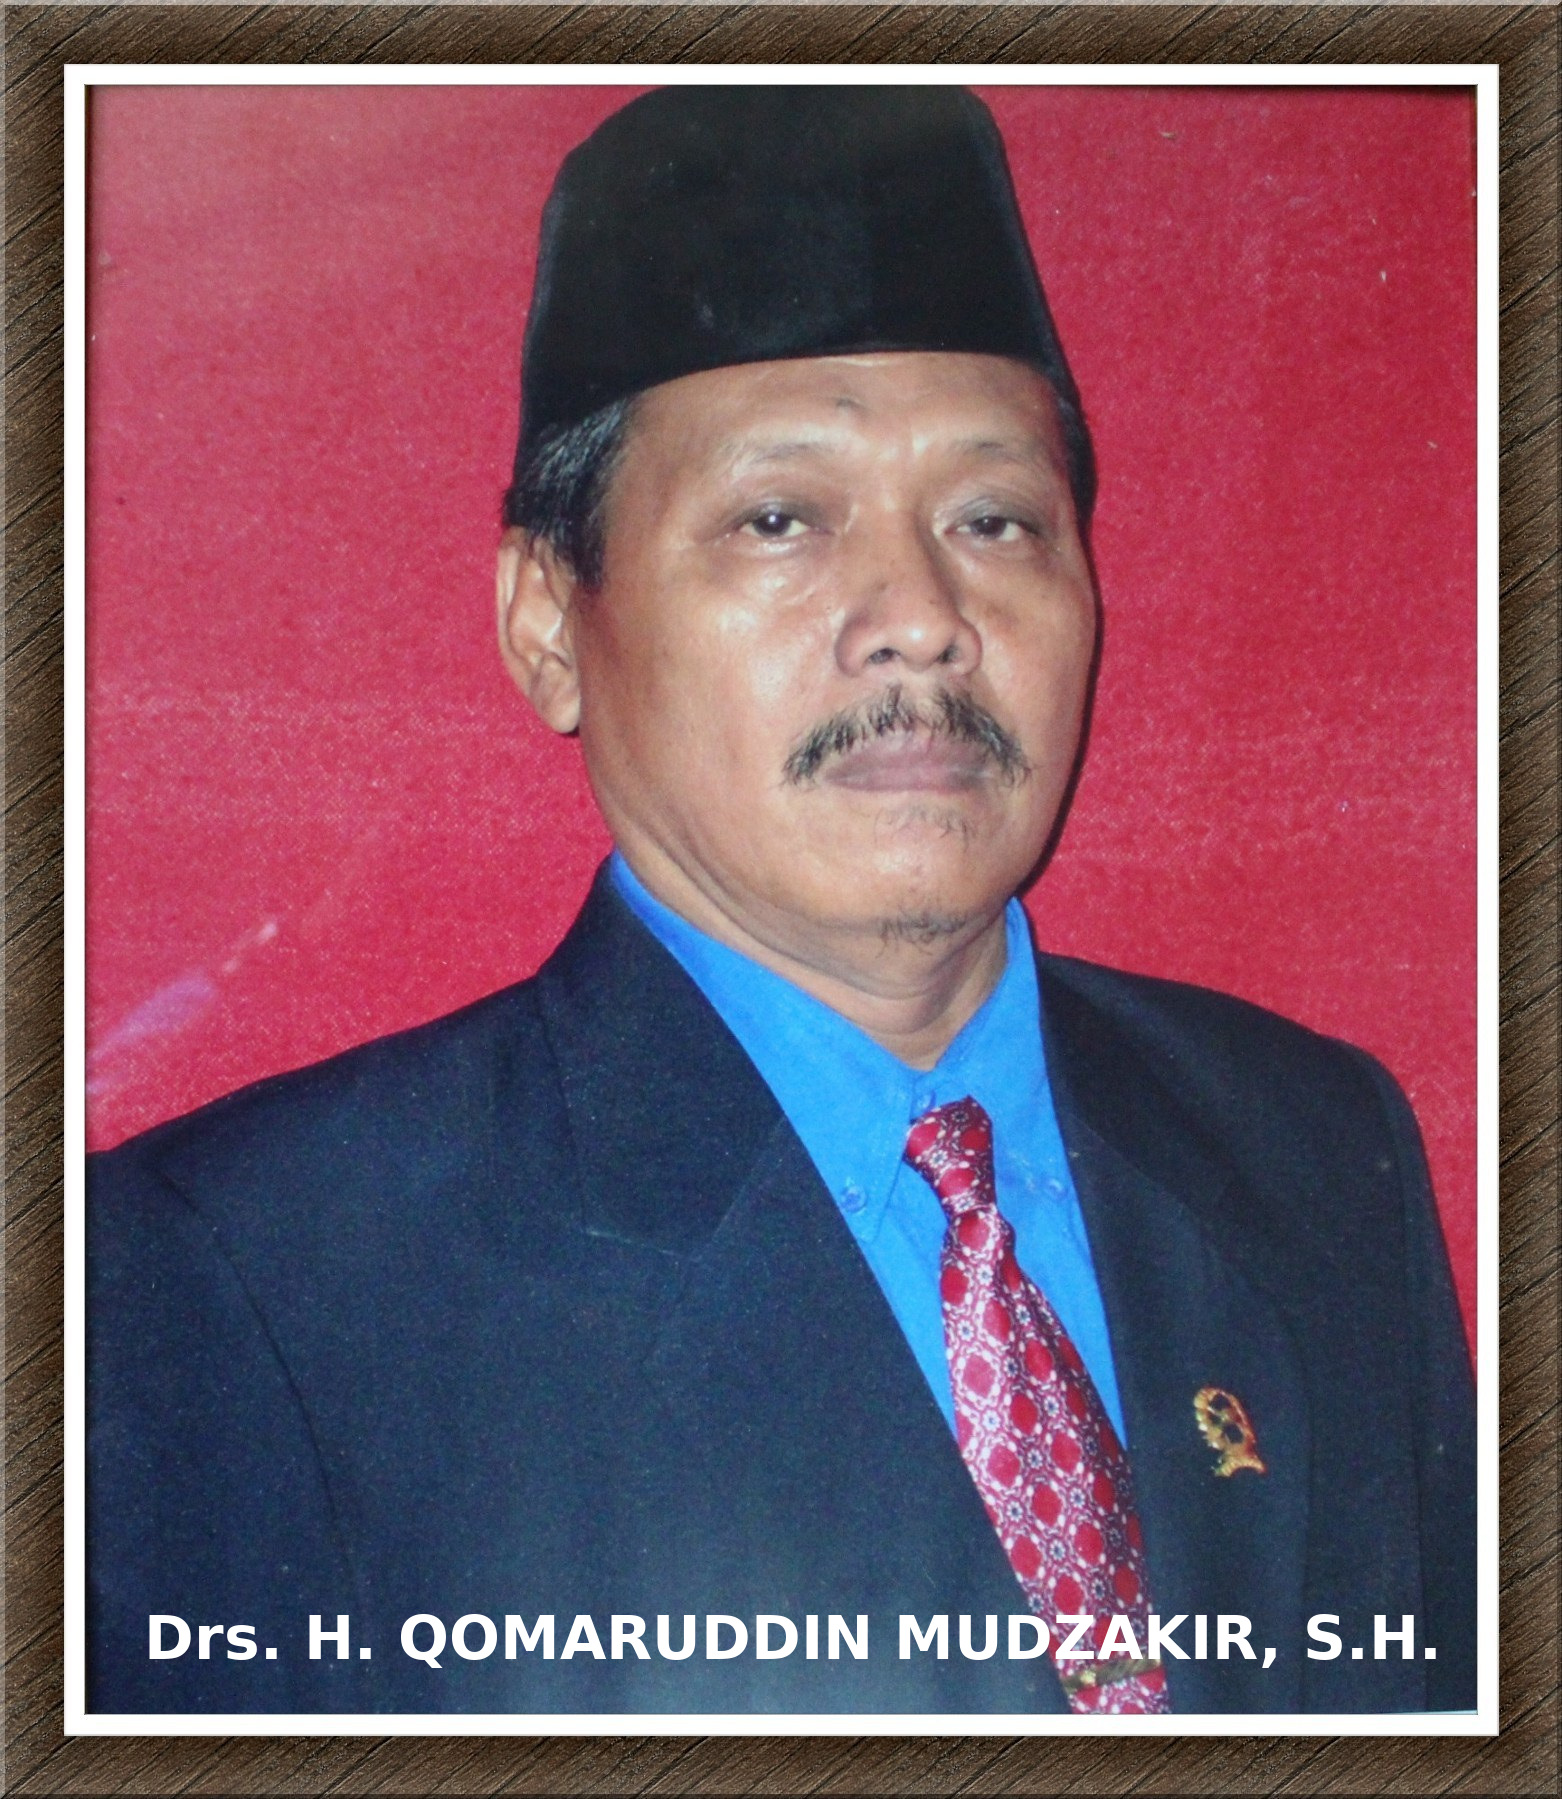 Drs. H. QOMARUDDIN MUDZAKIR S